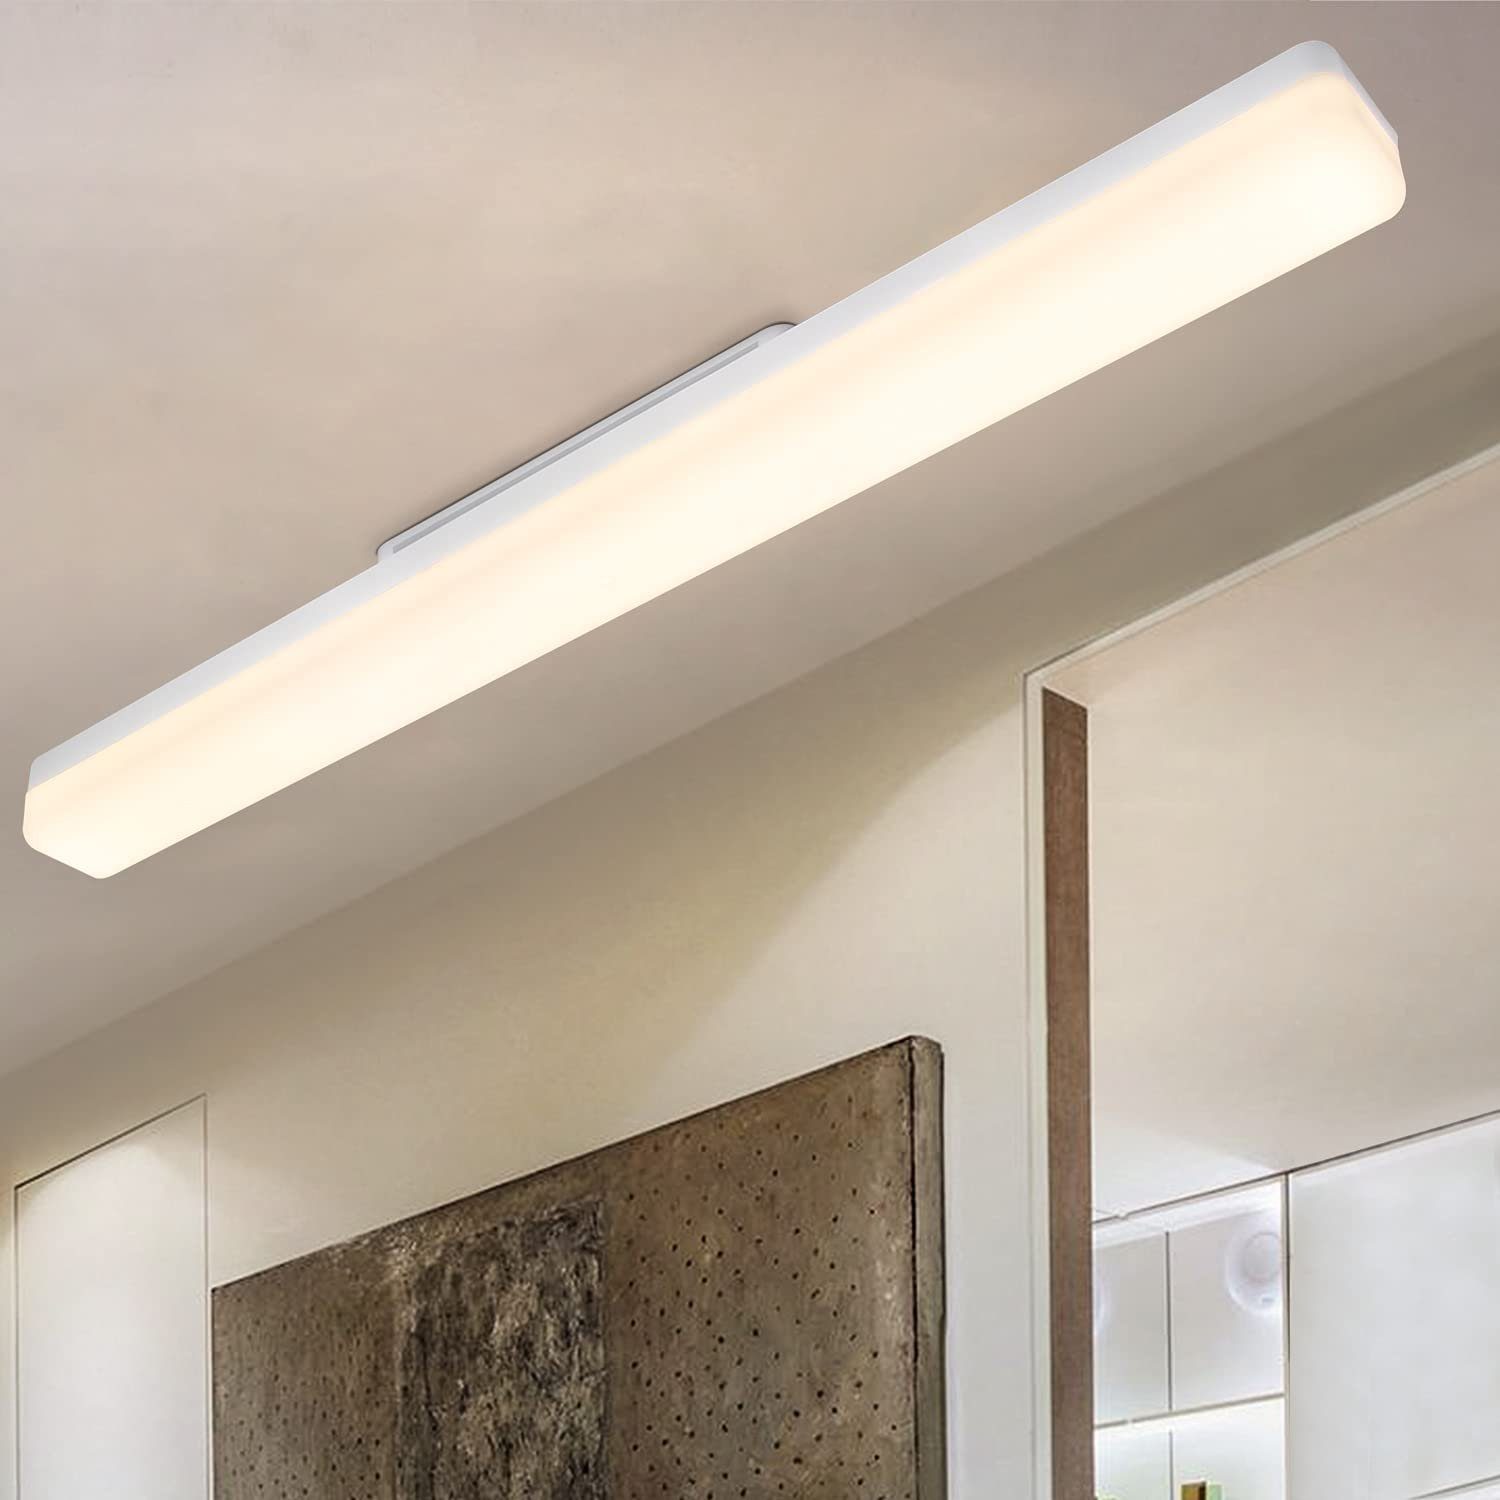 LED integriert, Tageslichtweiß ZMH fest LED Tageslicht LED Deckenleuchte Deckenlampe Deckenleuchte weiß,